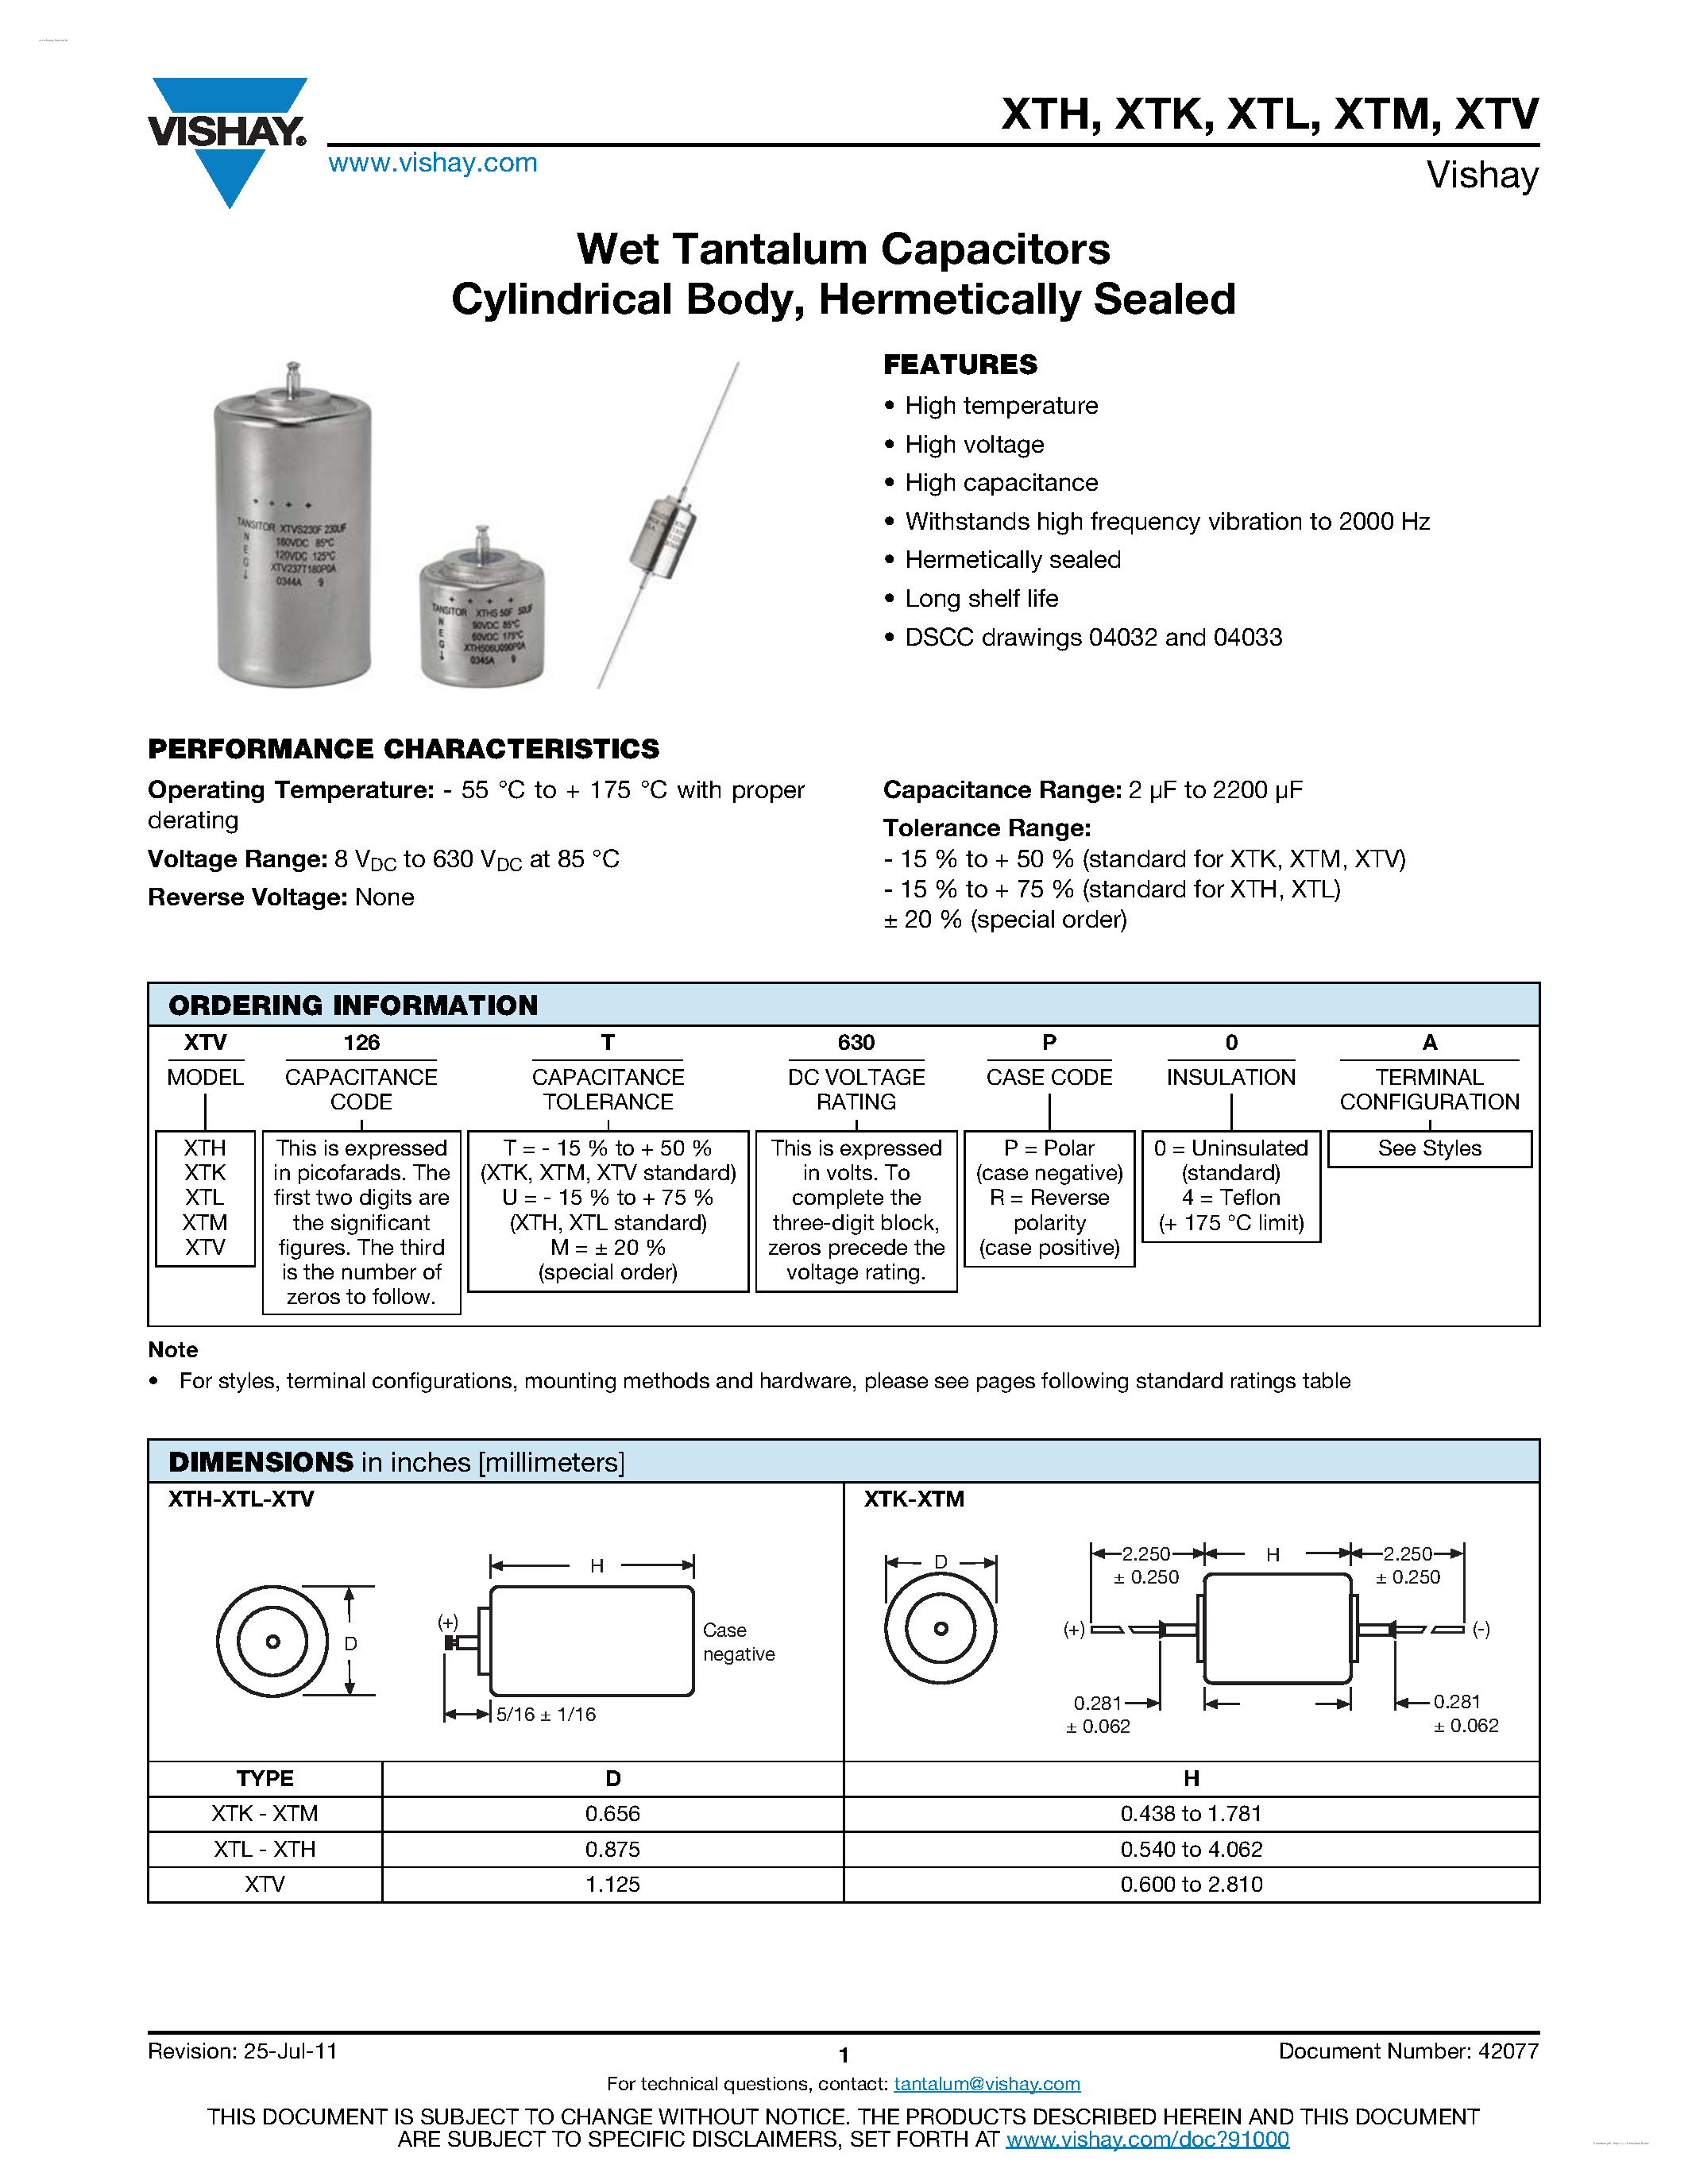 Даташит XTM - Wet Tantalum Capacitors страница 1